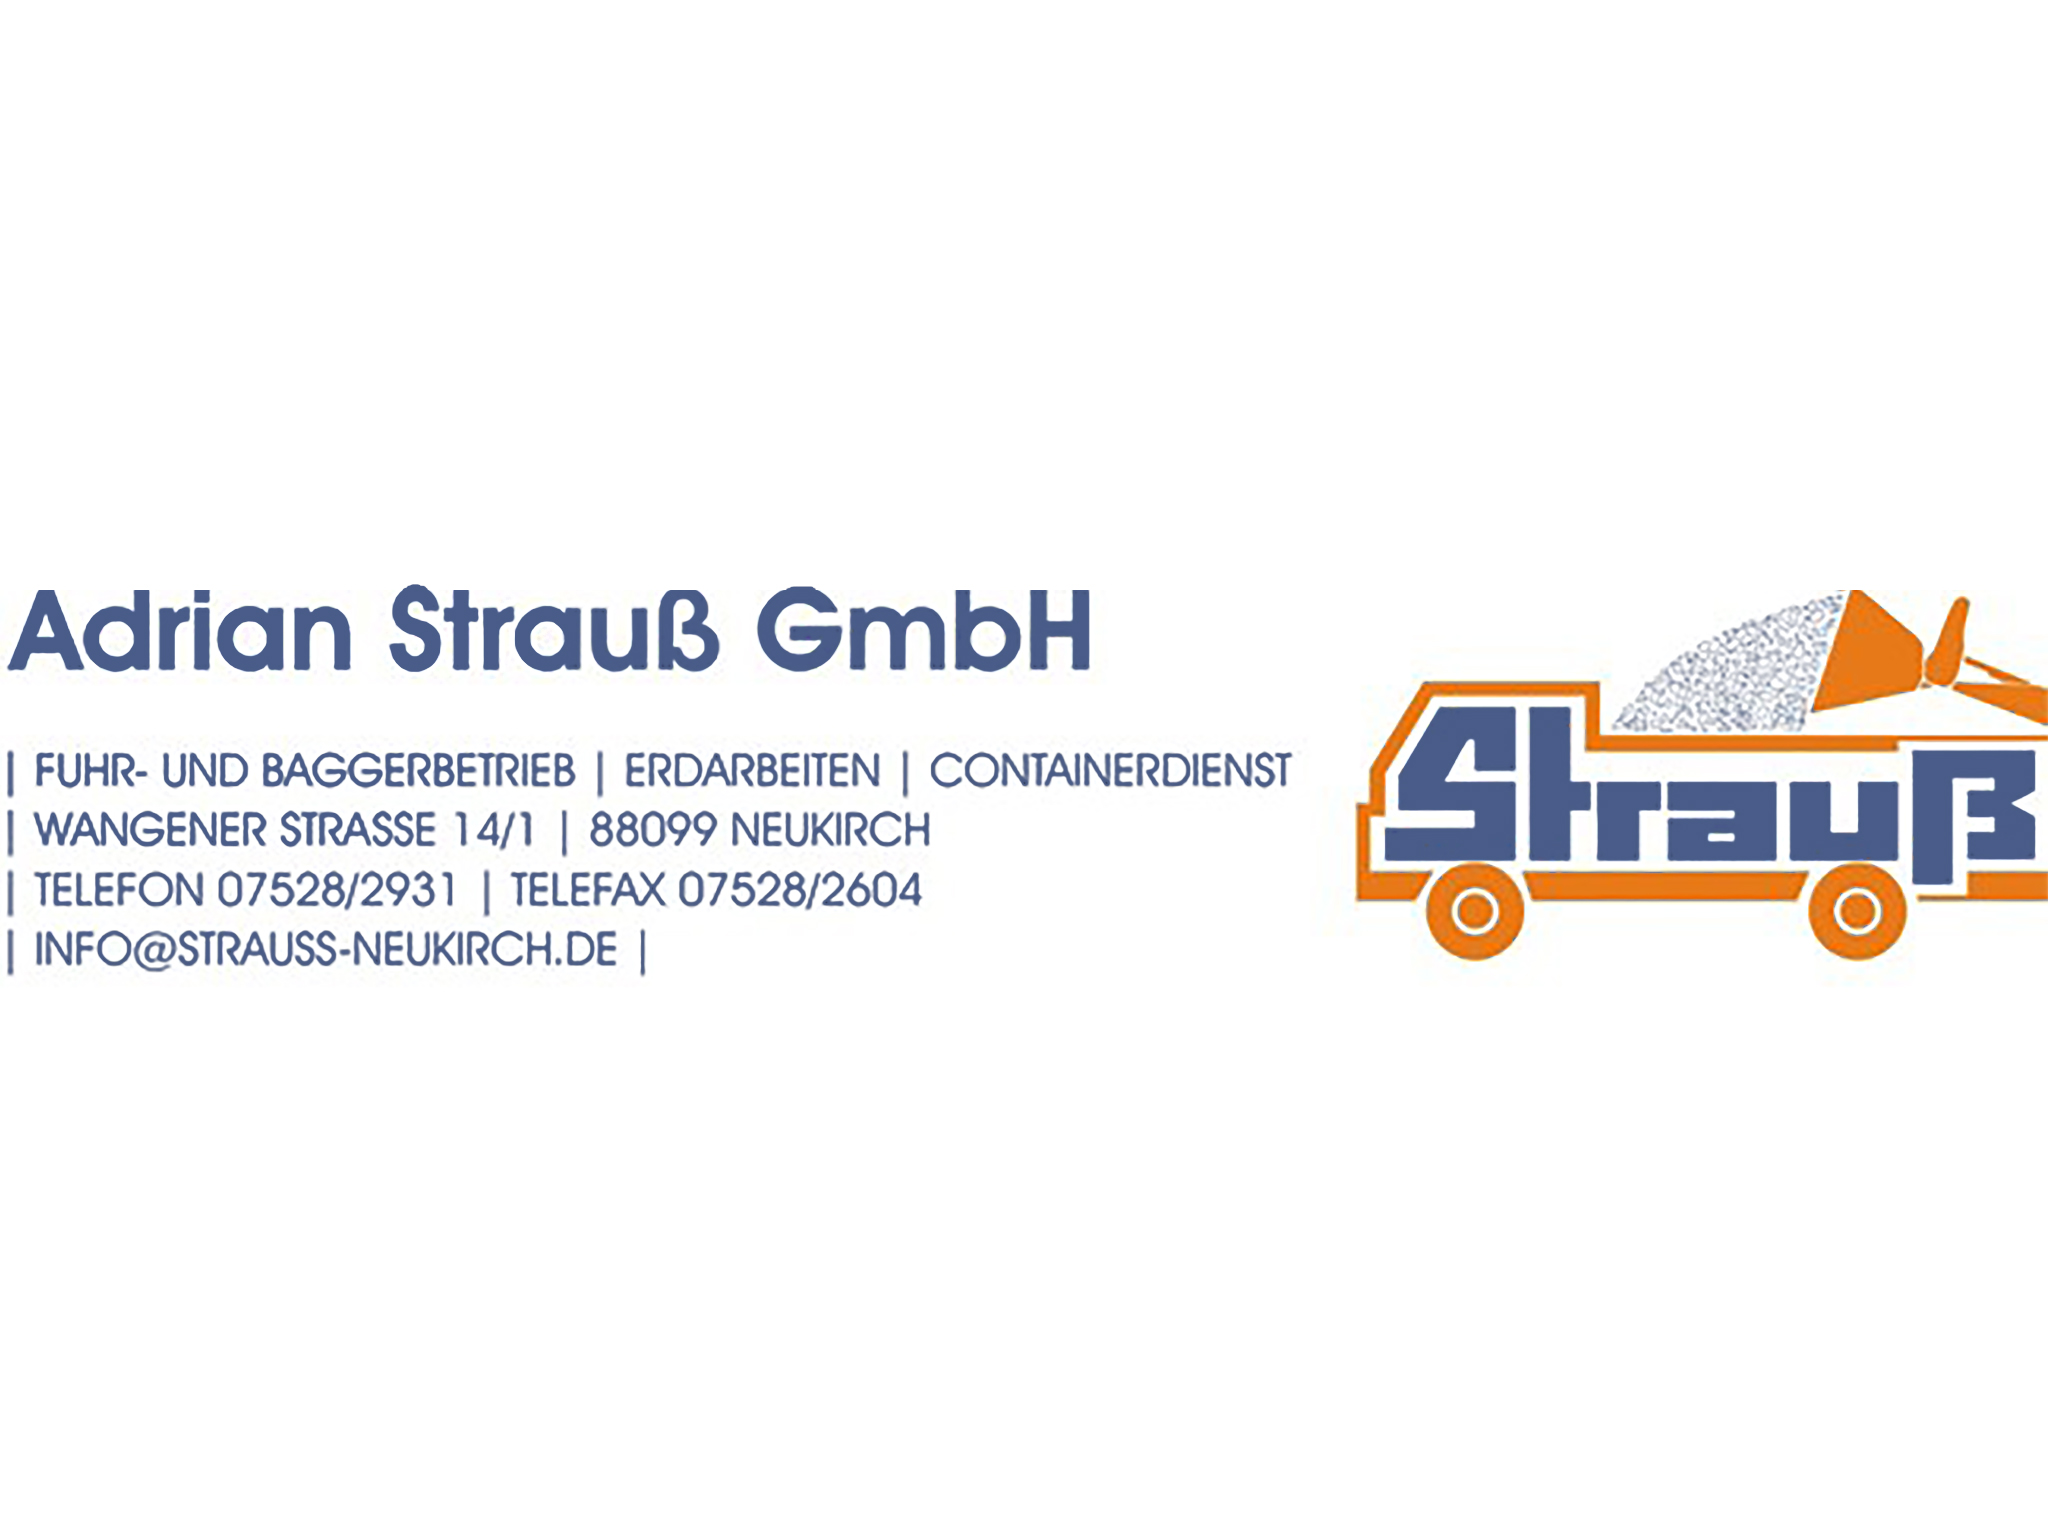 Adrian Strauß GmbH